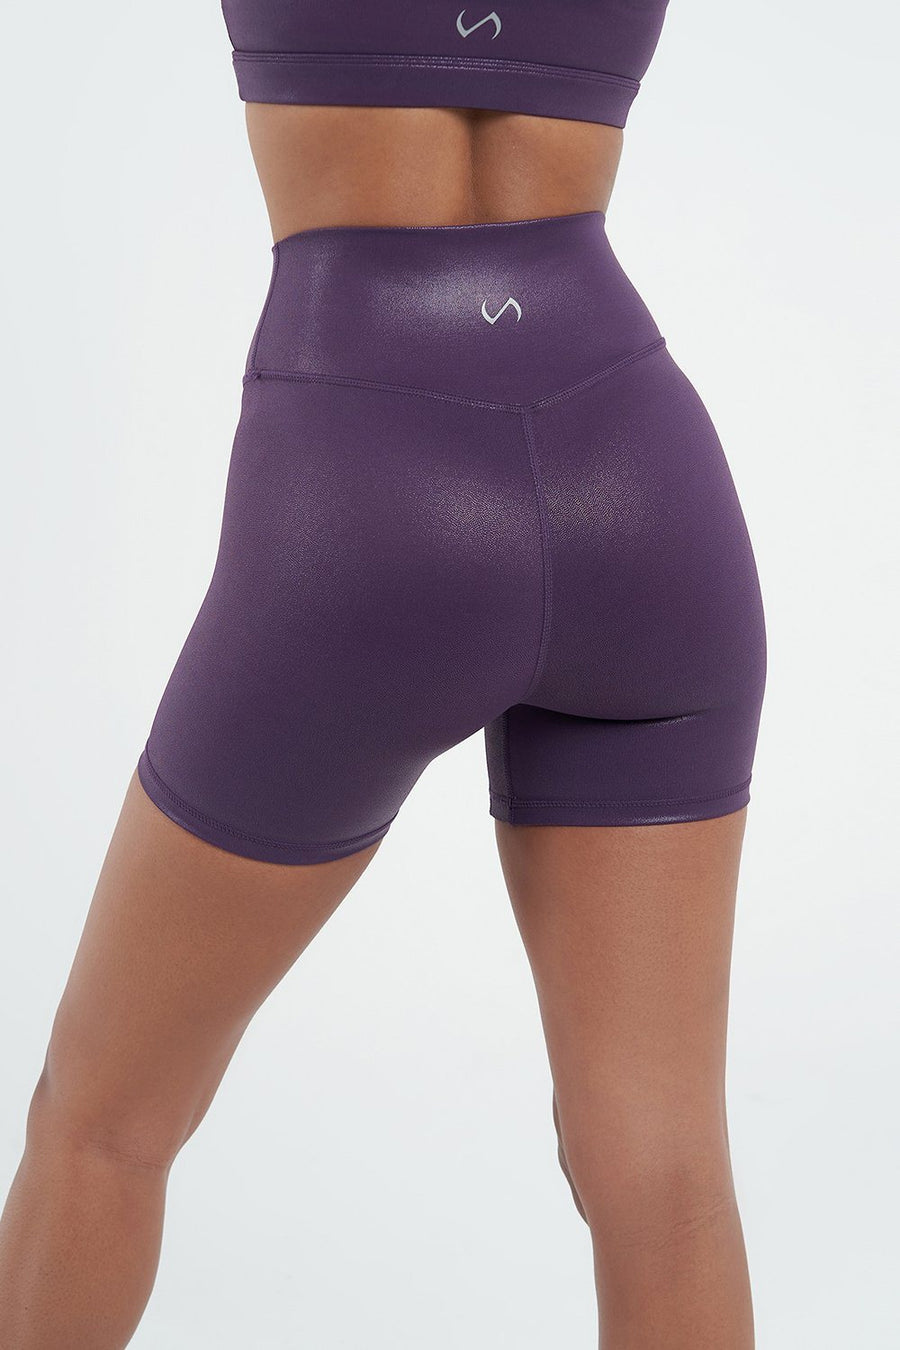 TLF Gerana High Waisted Workout Shorts 2.0 Regal Purple Shine 2